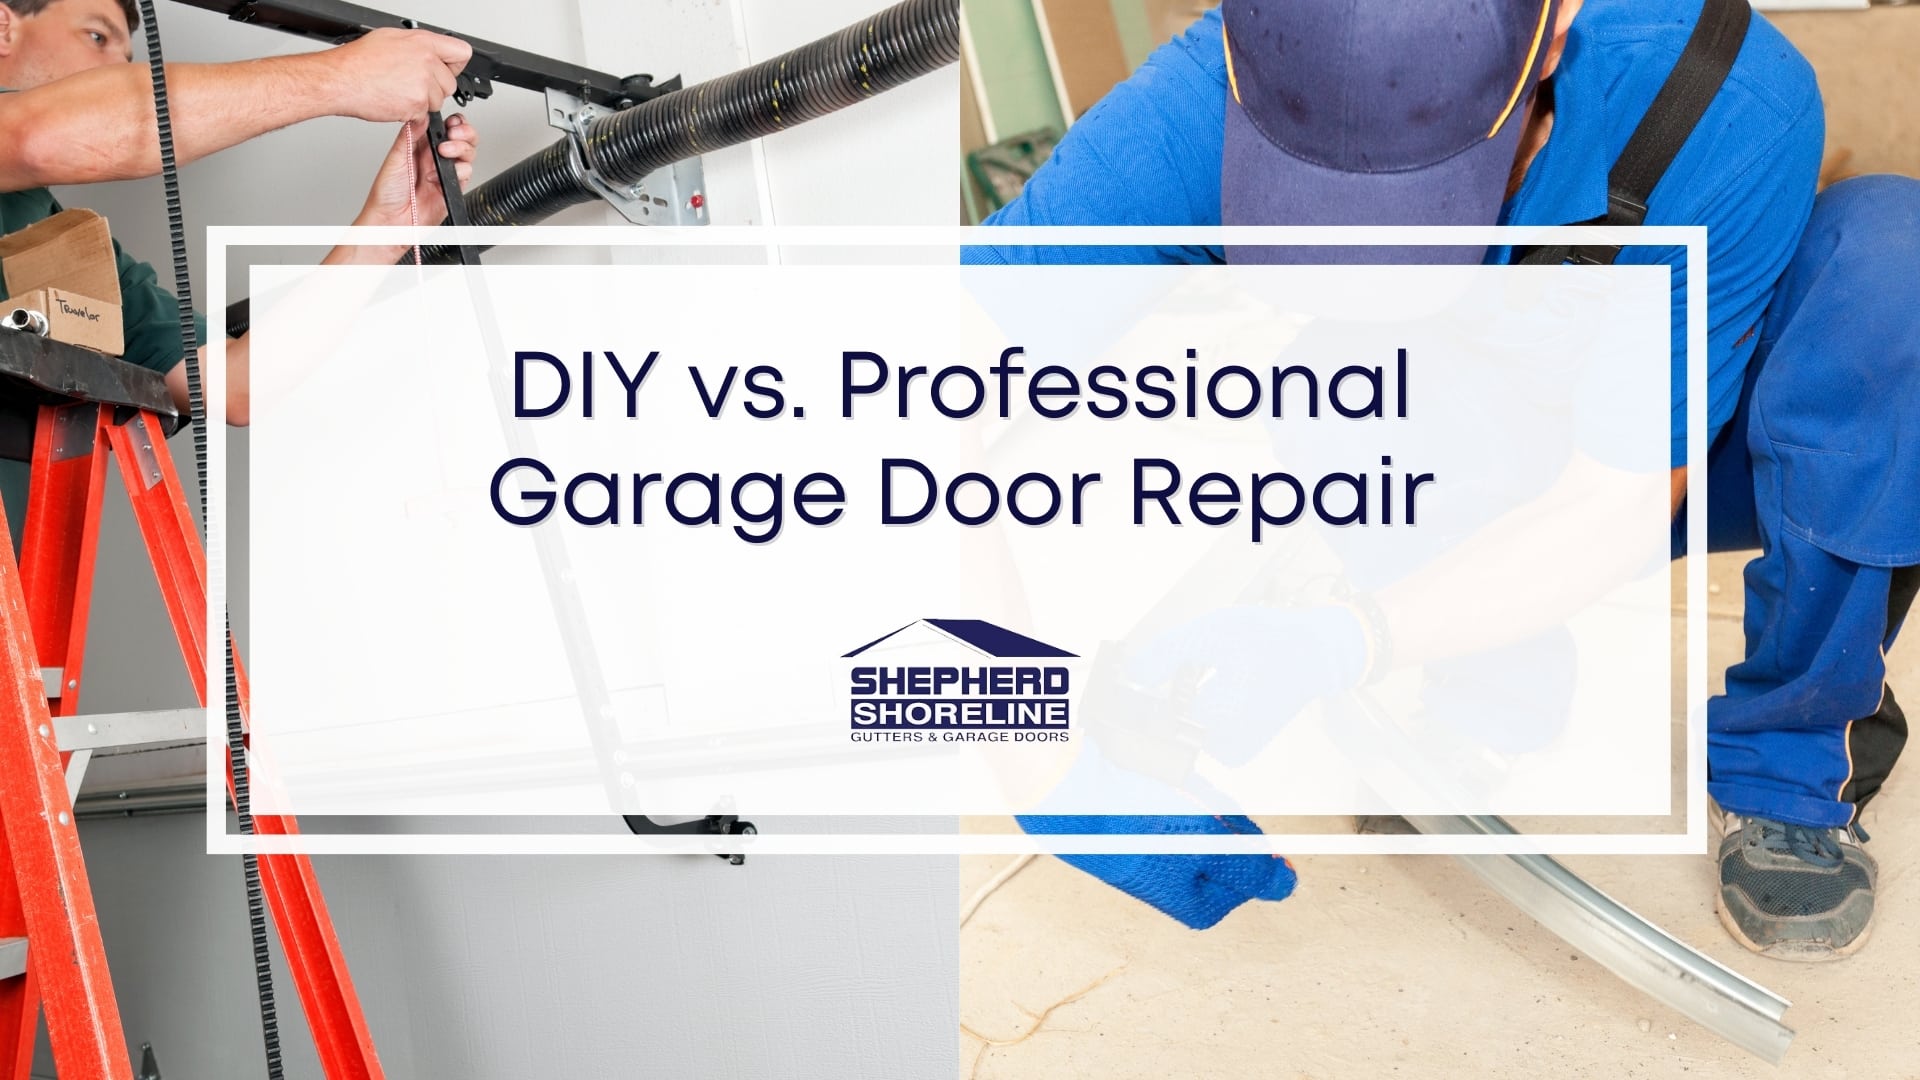 Featured image of diy vs. professional garage door repair